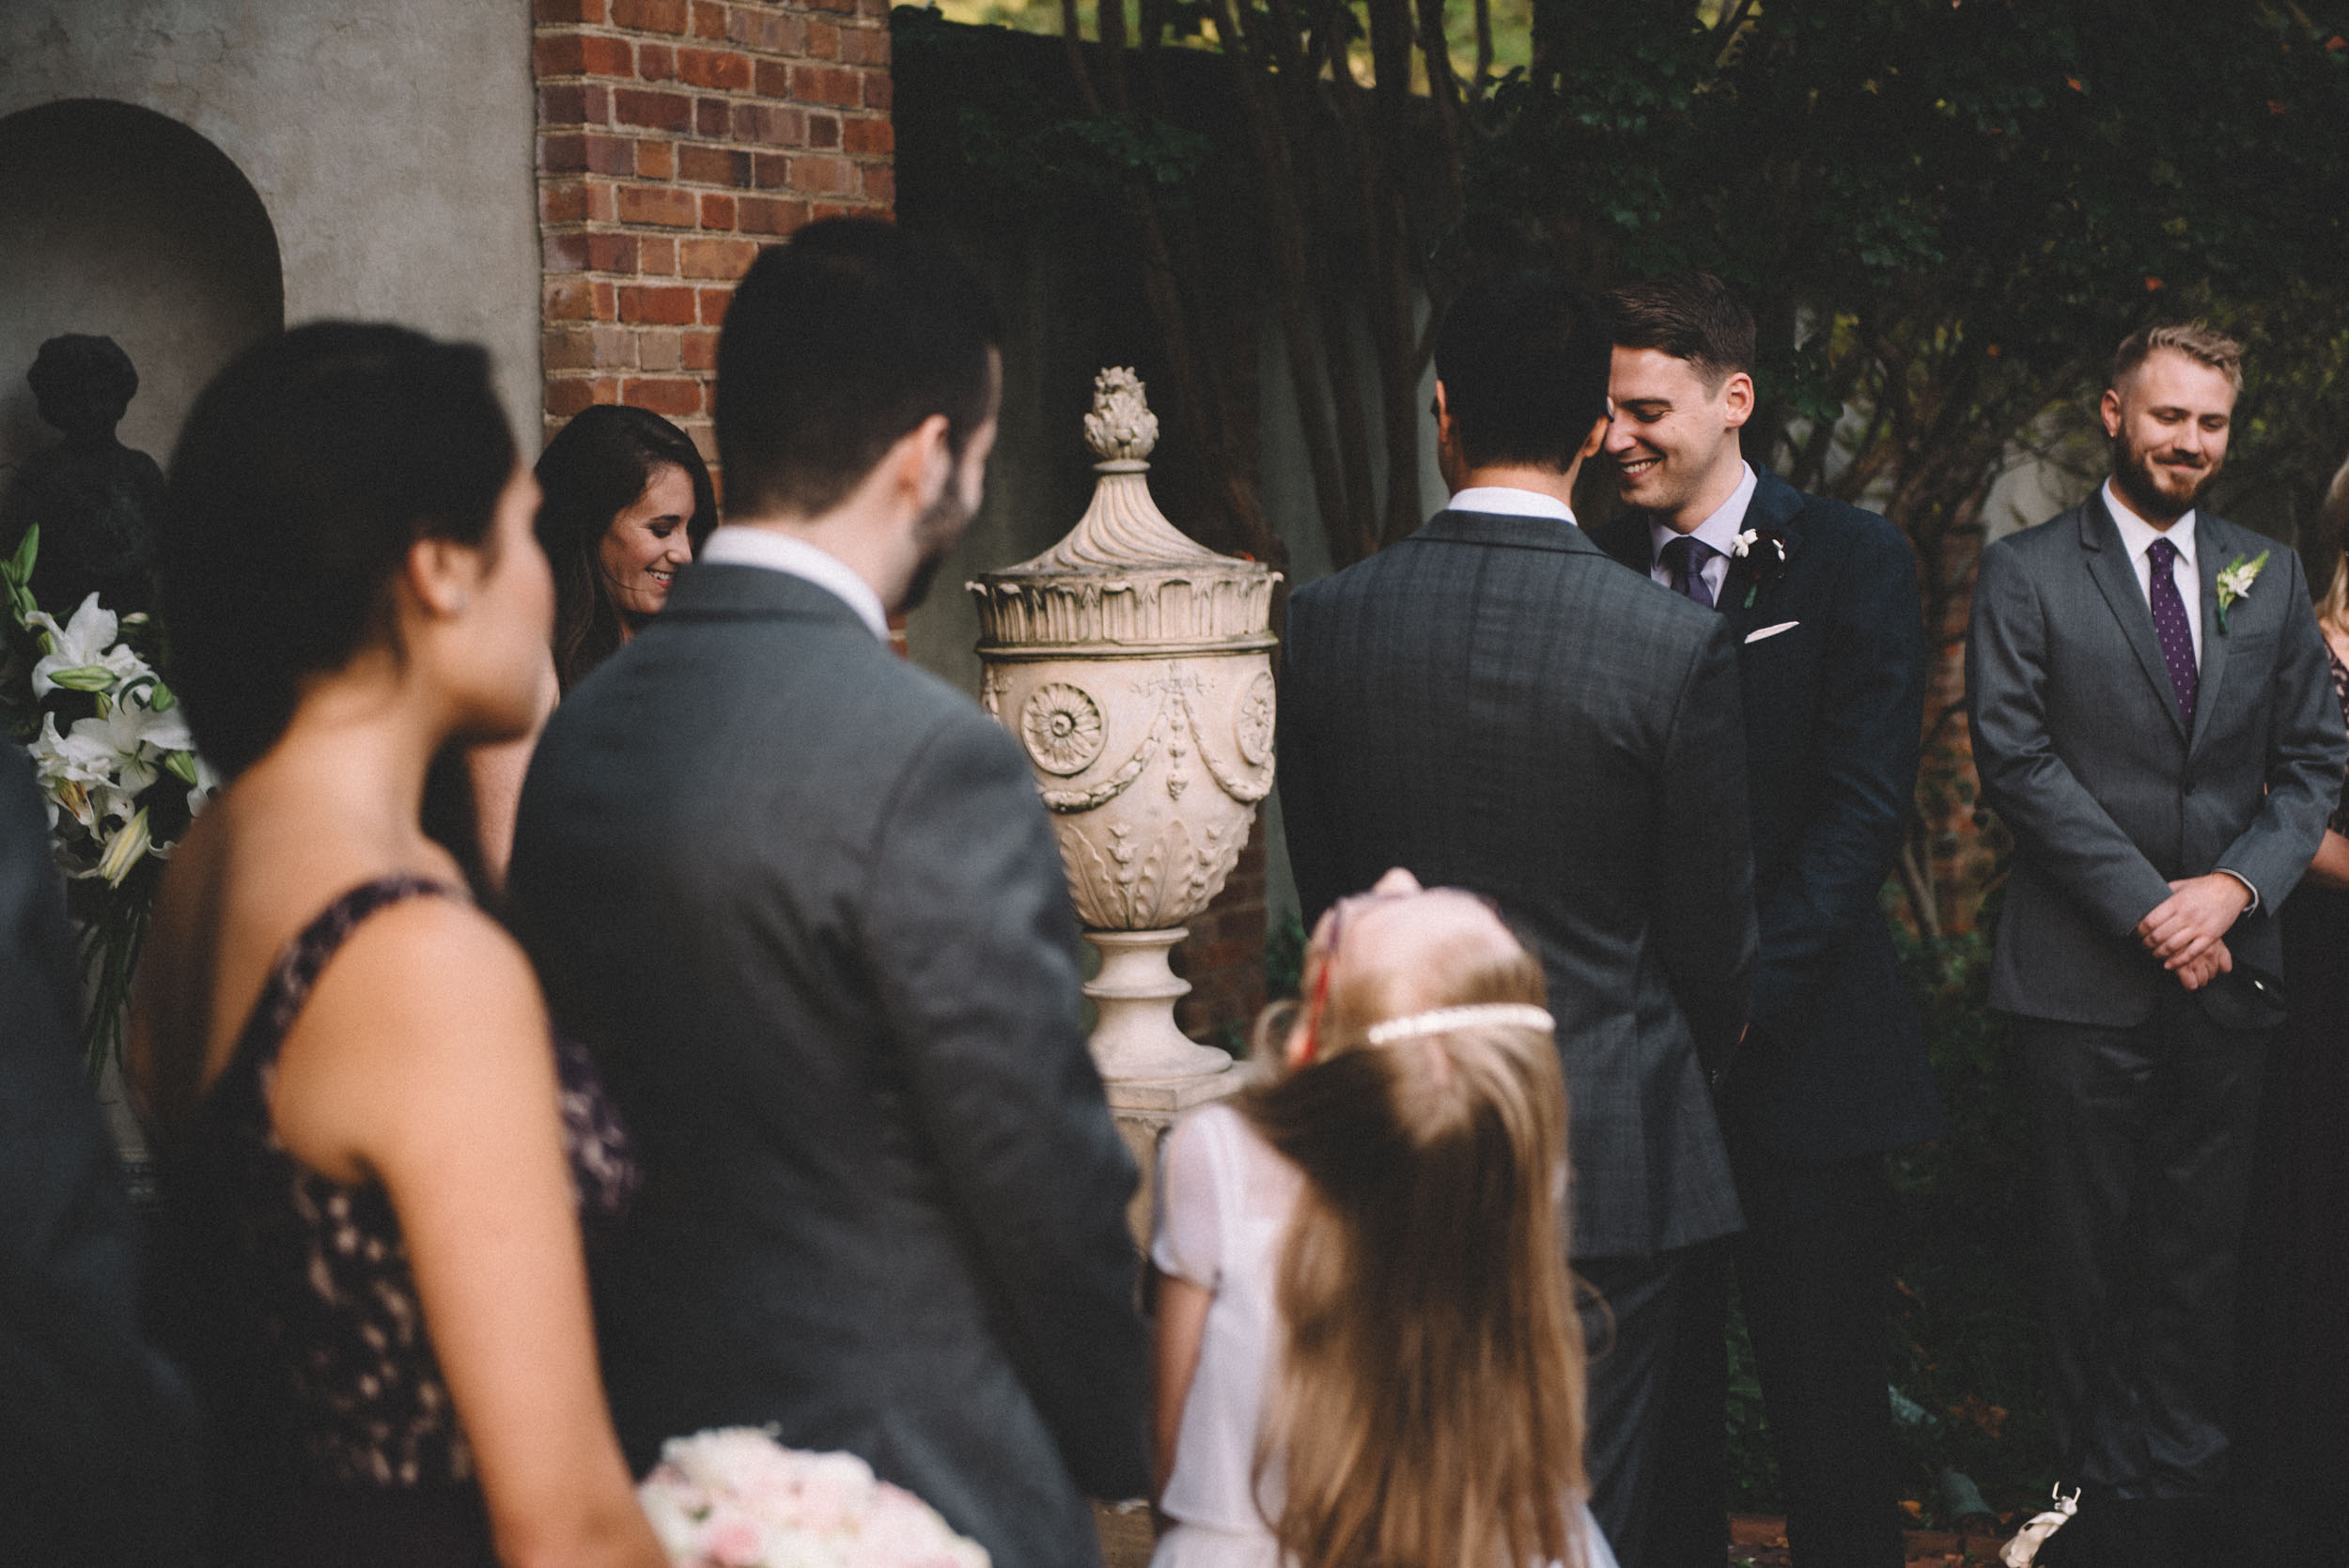 Dumbarton-House-wedding-44.jpg